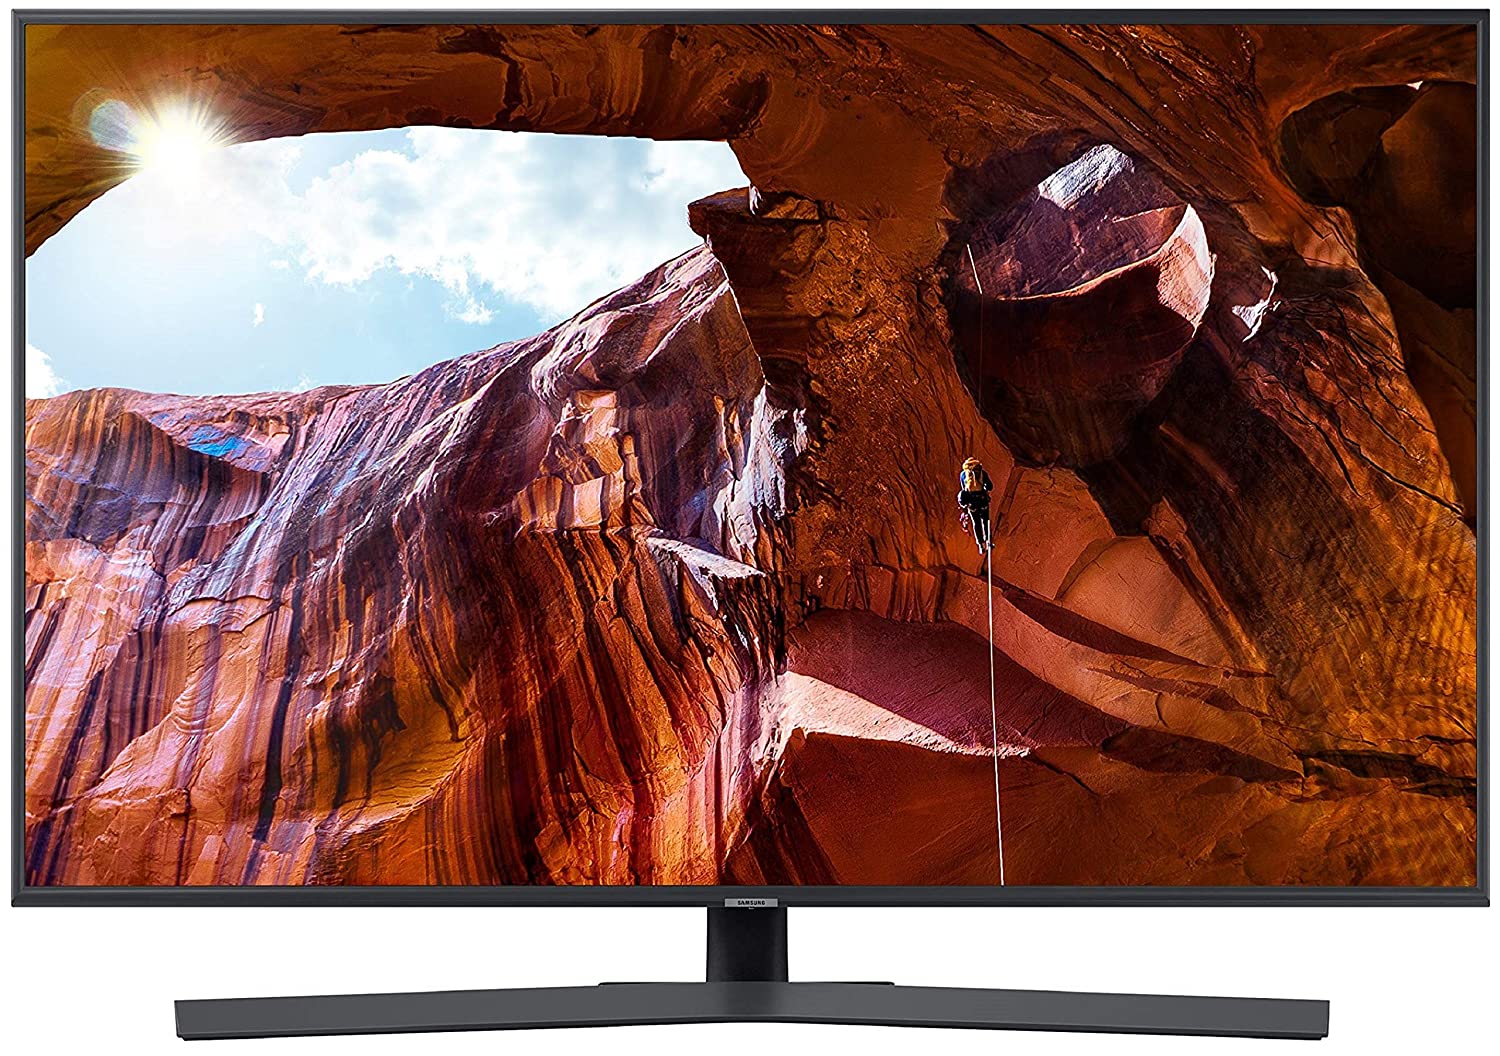 Samsung UA43RU7470UXXL Best Smart TV